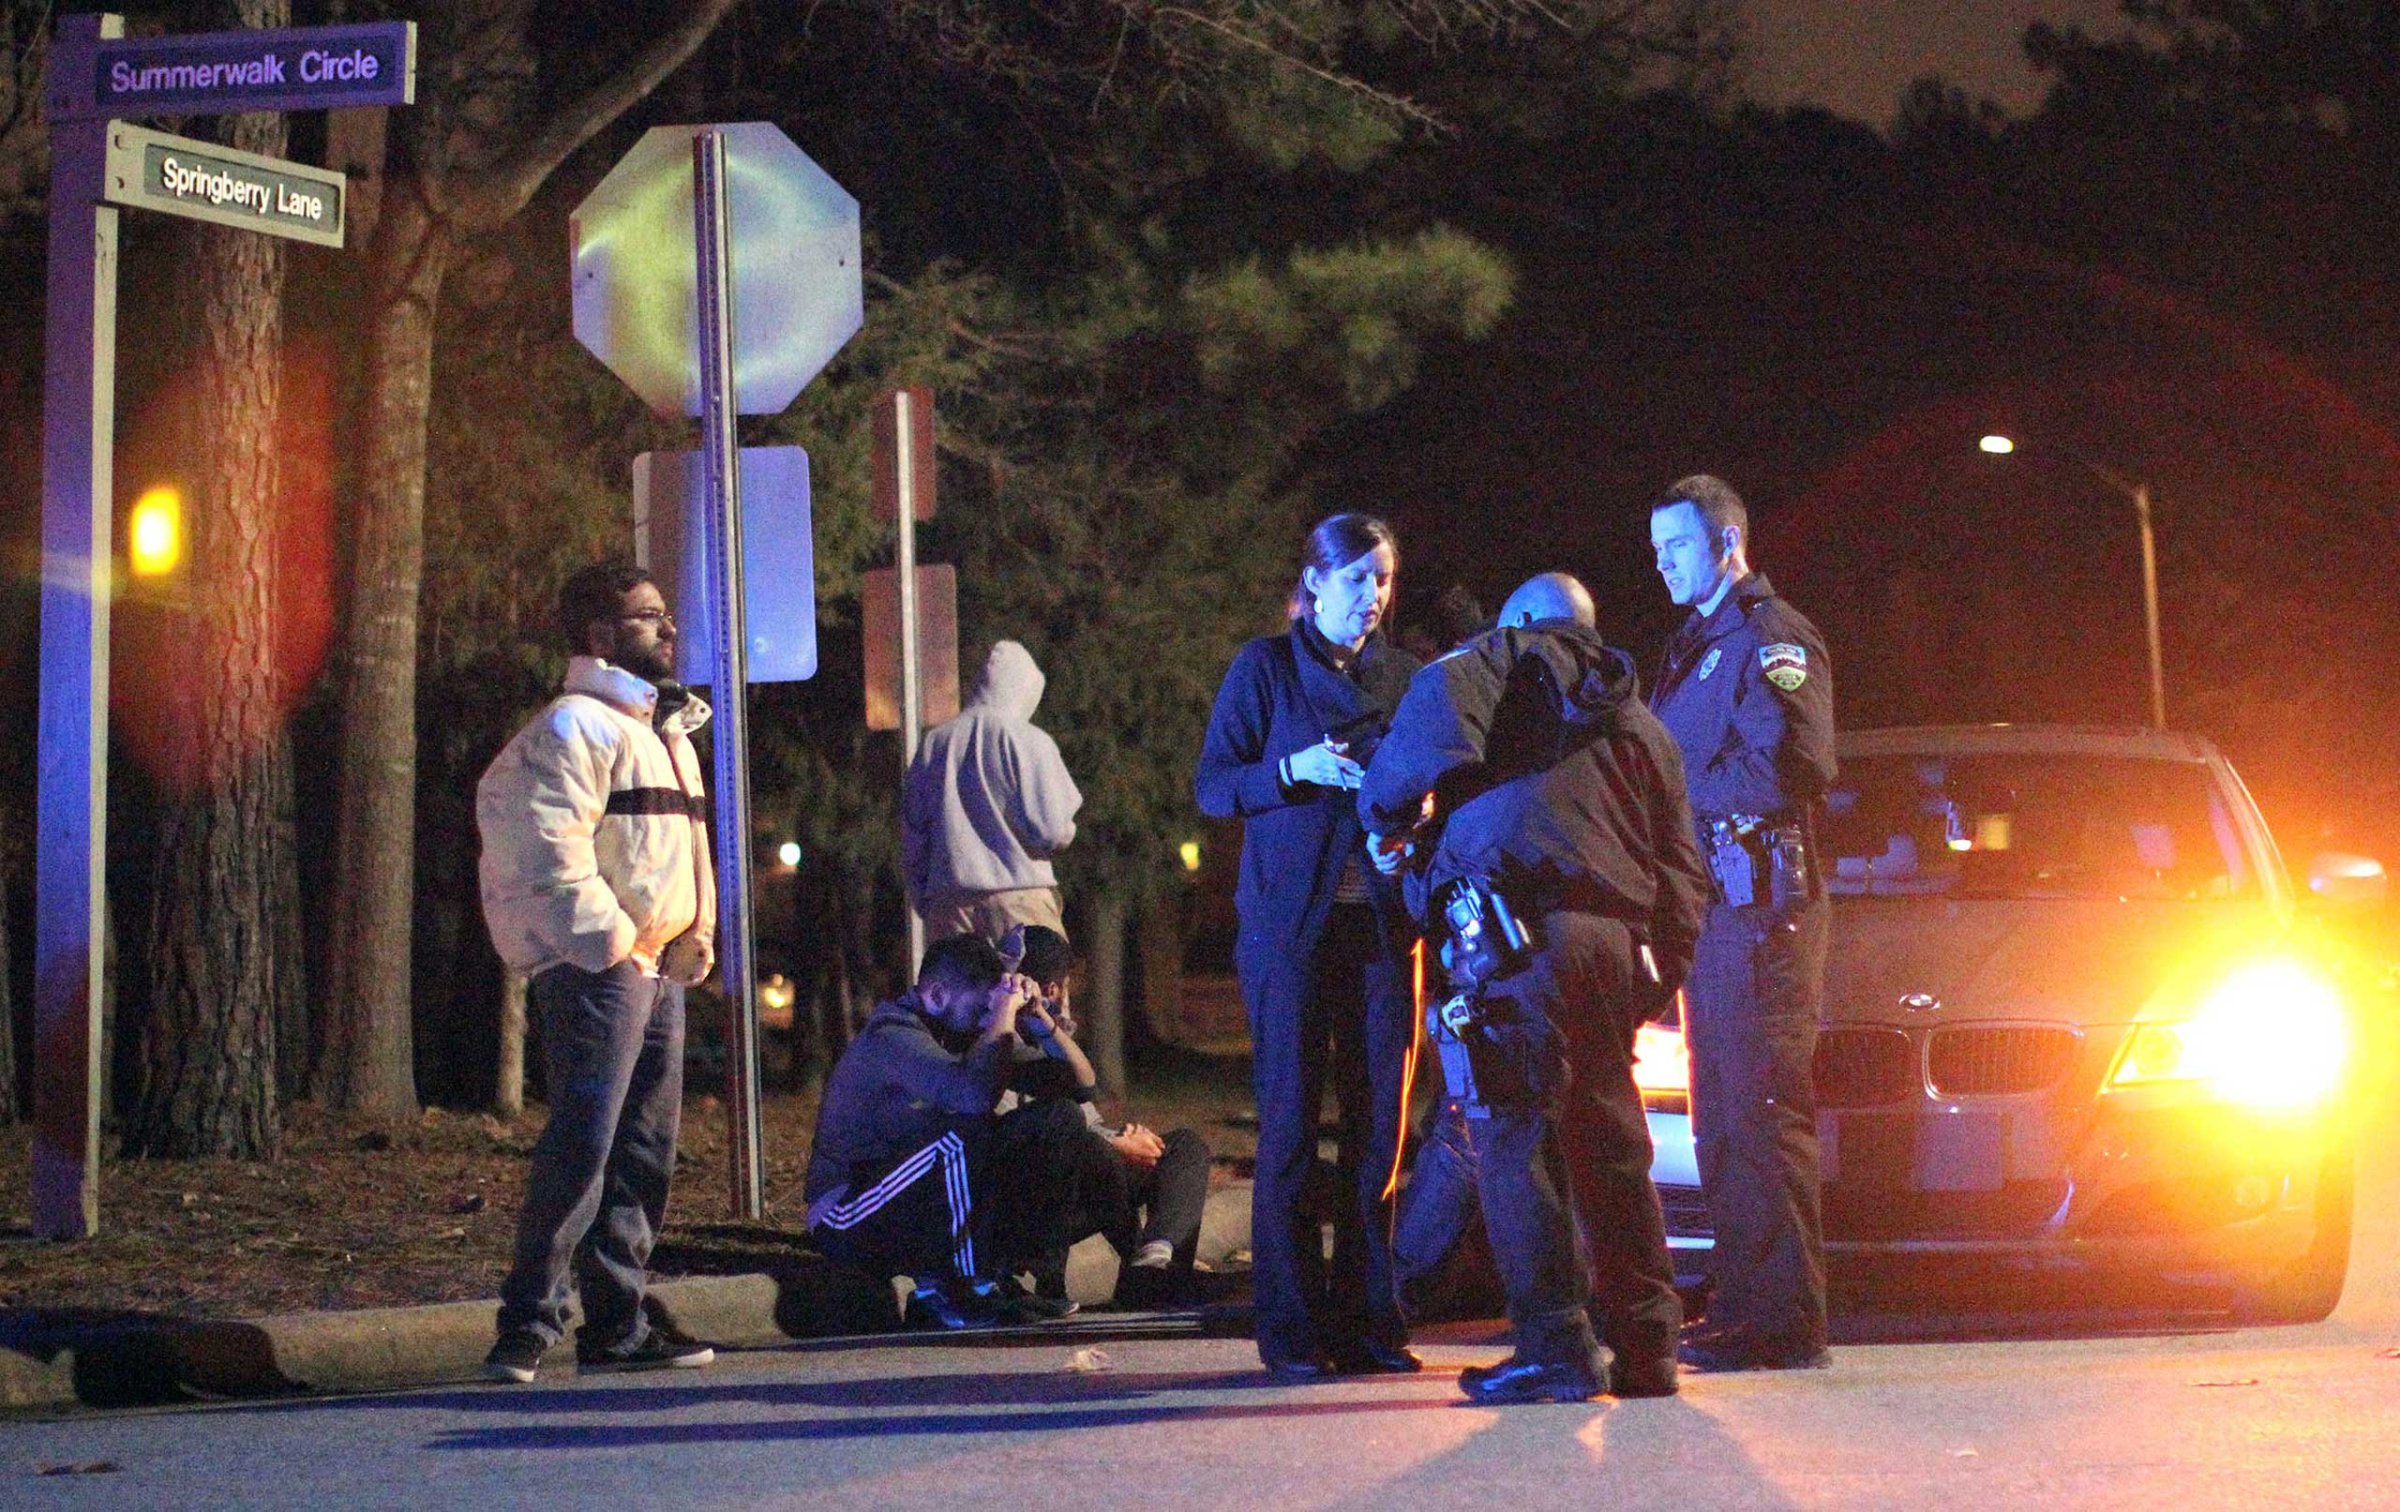 Chapel Hill police officers investigate the scene of three murders near Summerwalk Circle in Chapel Hill, N.C., Feb. 10, 2015.